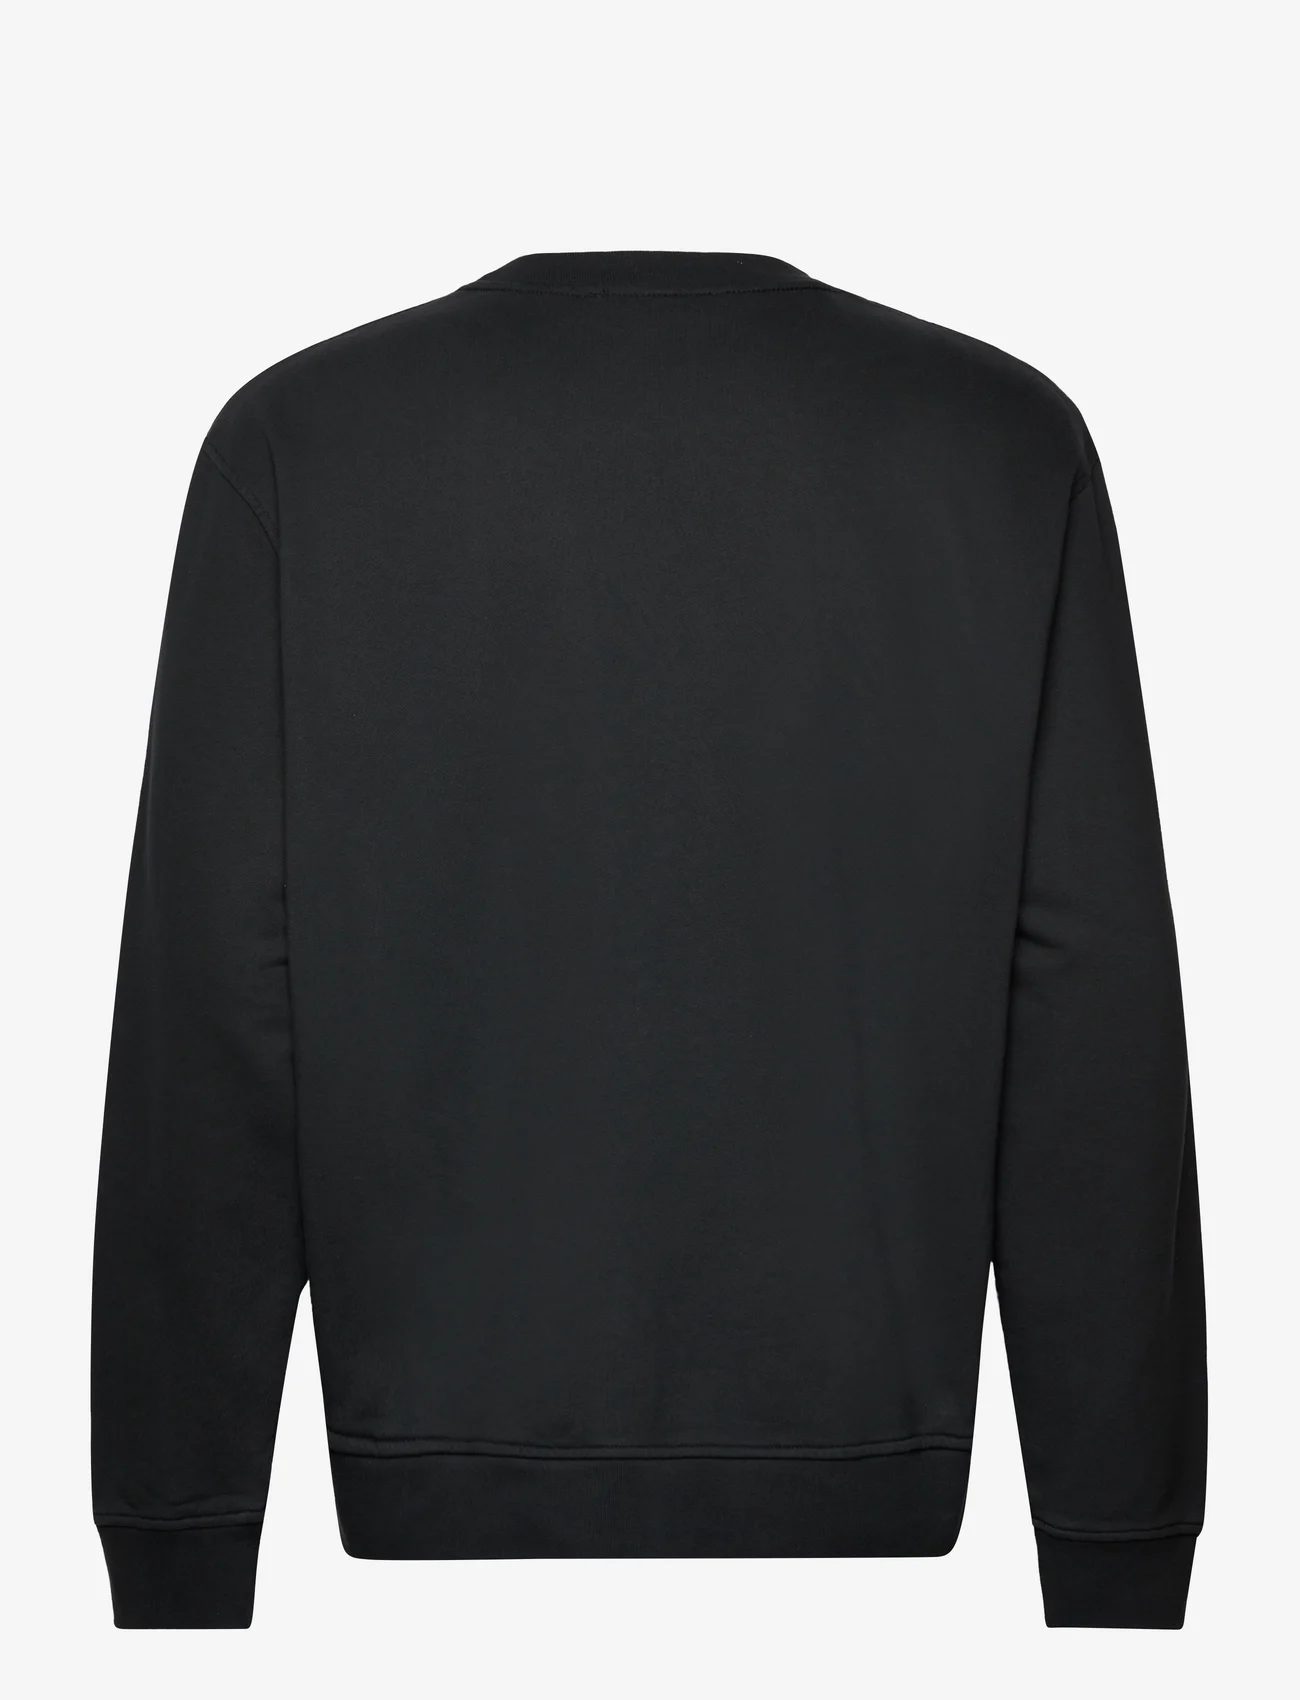 AllSaints - CHIAO CREW - sweatshirts - jet black - 1